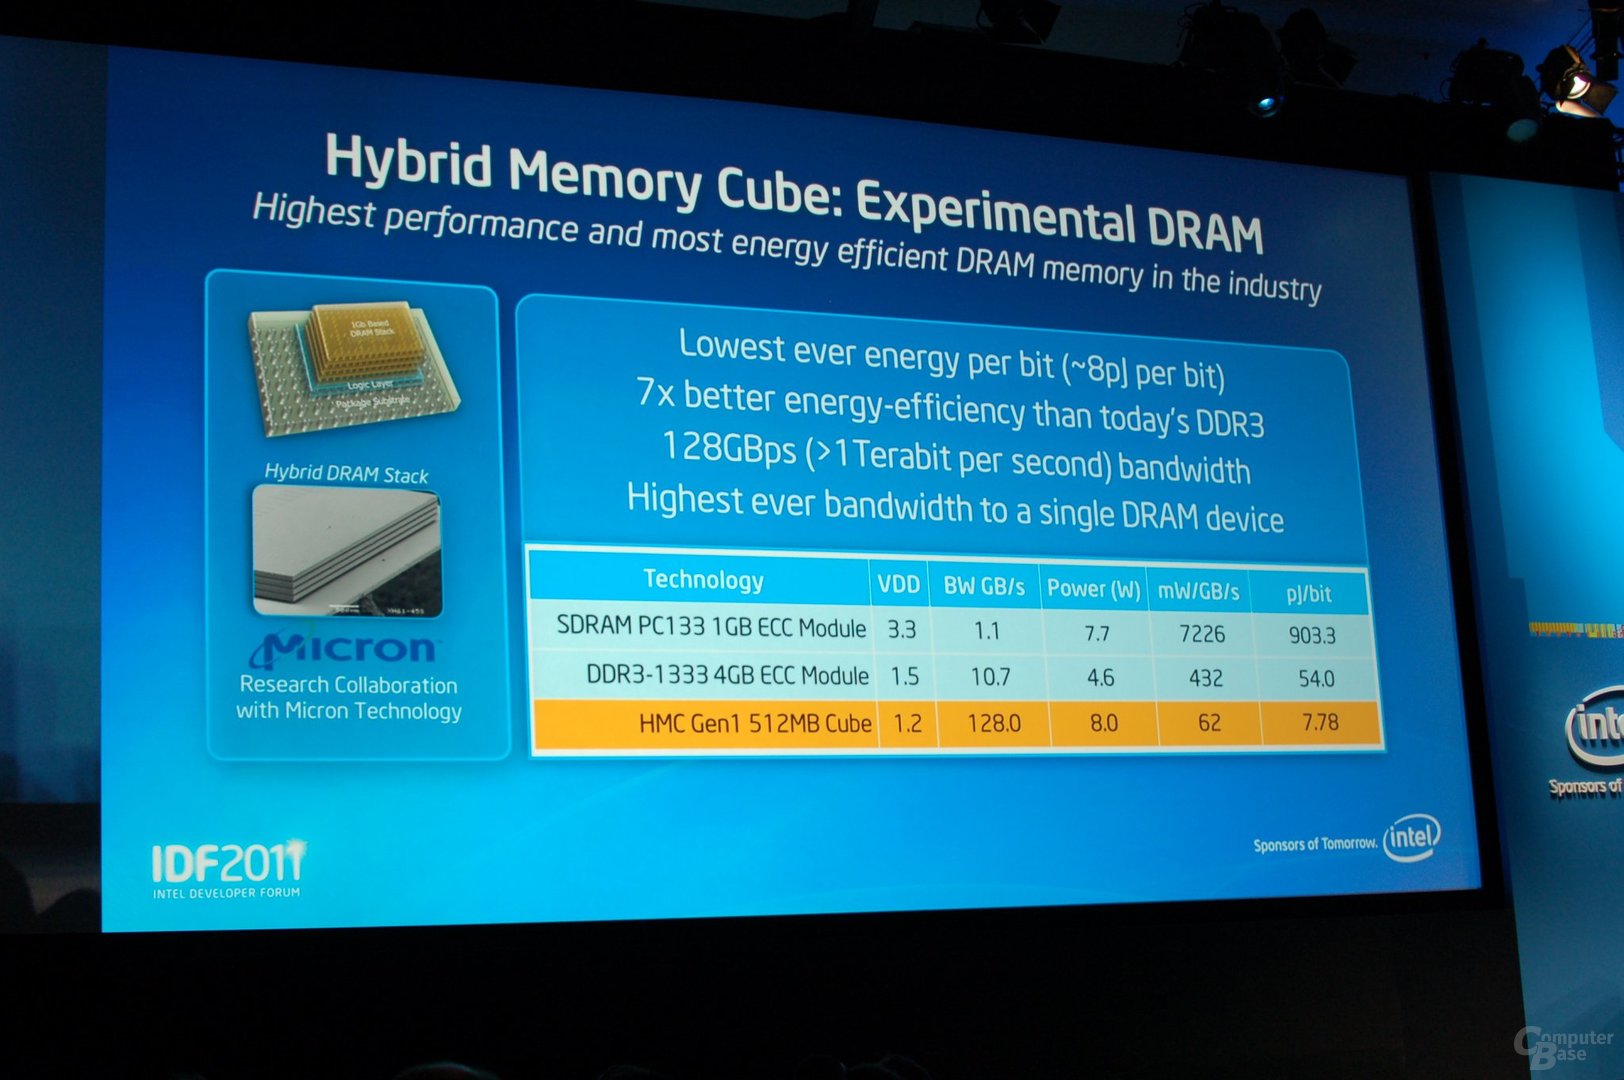 Hybrid Memory Cube DRAM